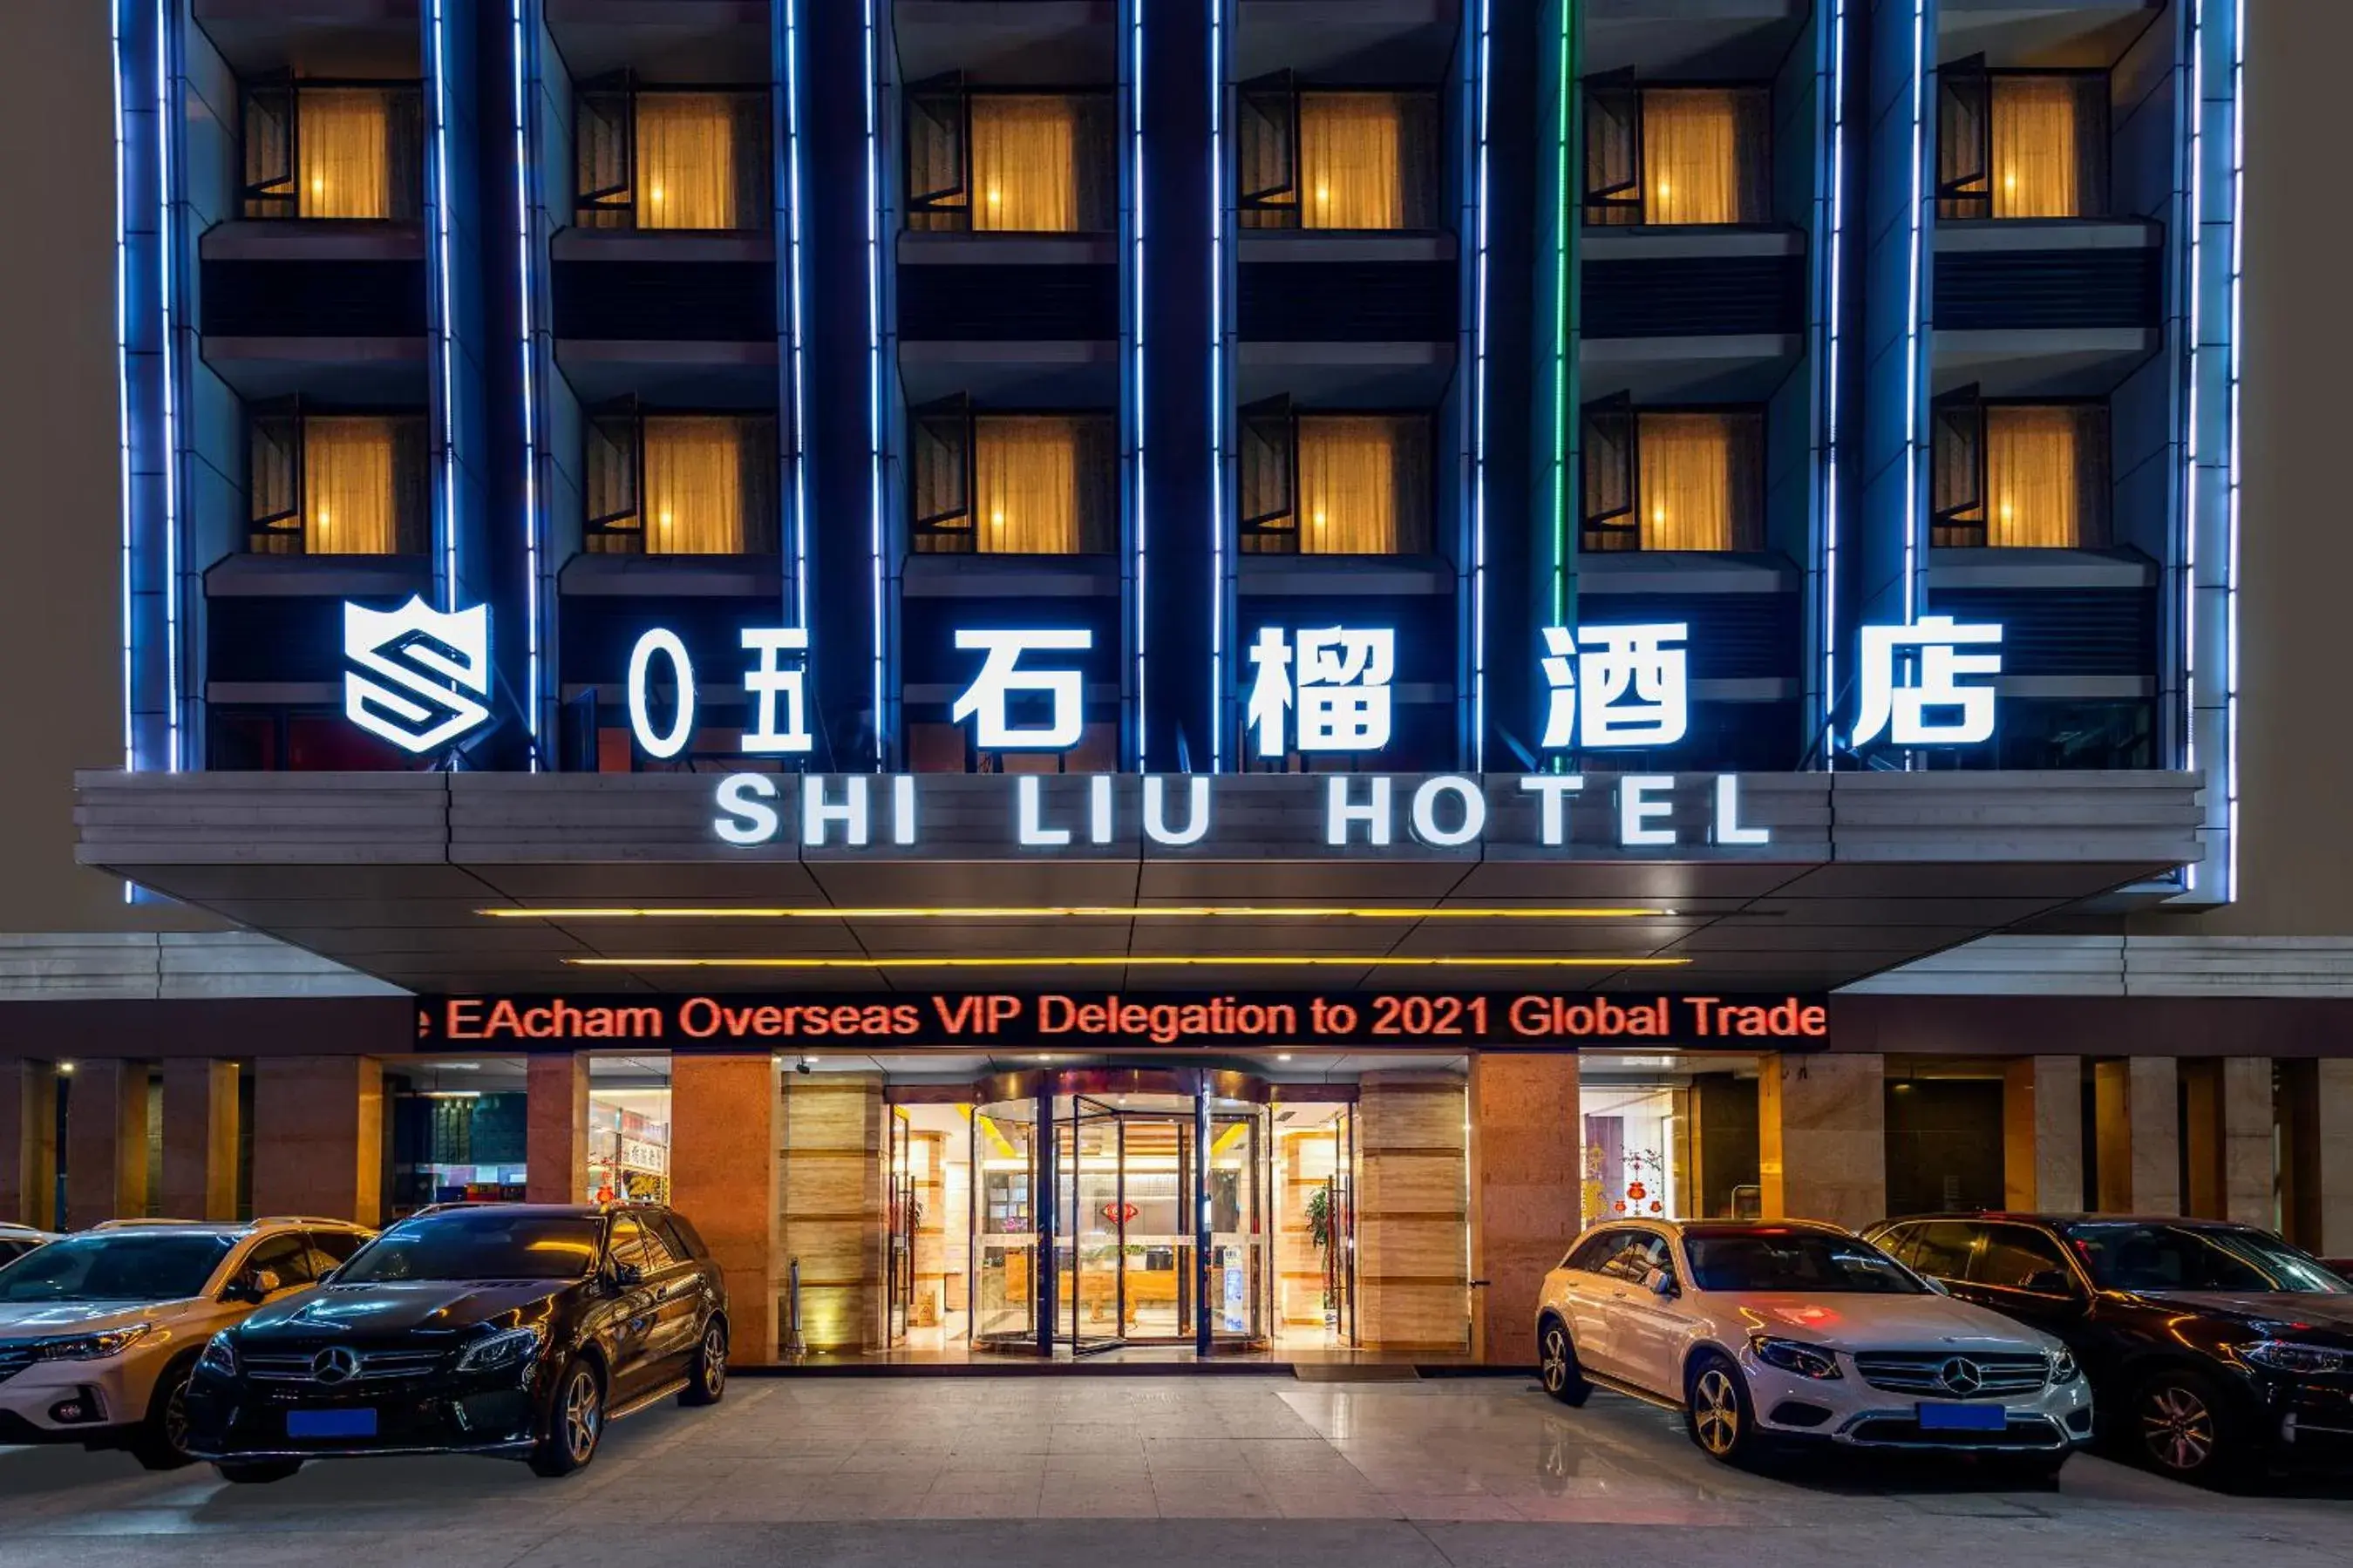 Property building in Shi Liu Hotel